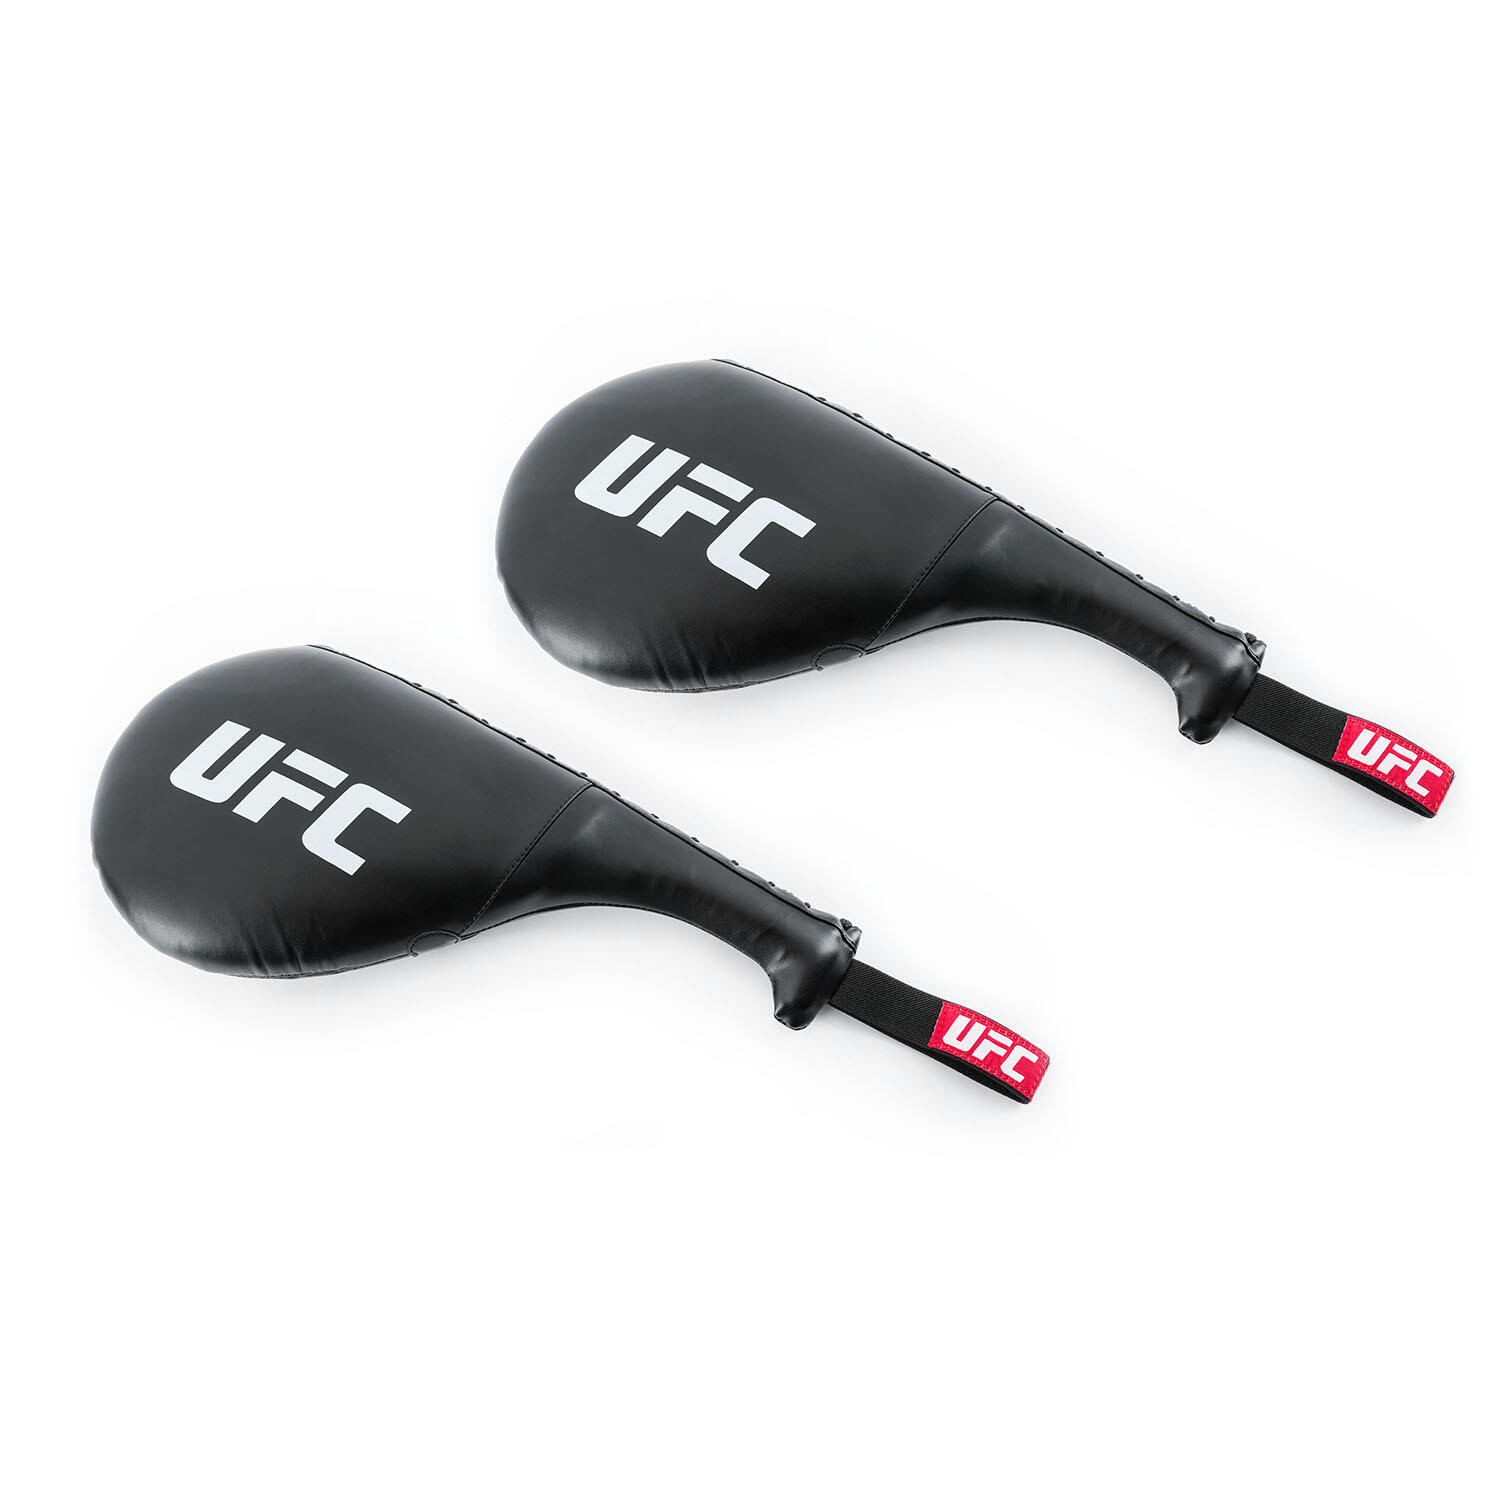 UFC ULTIMATE KOMBAT UFC Pro Paddle Targets